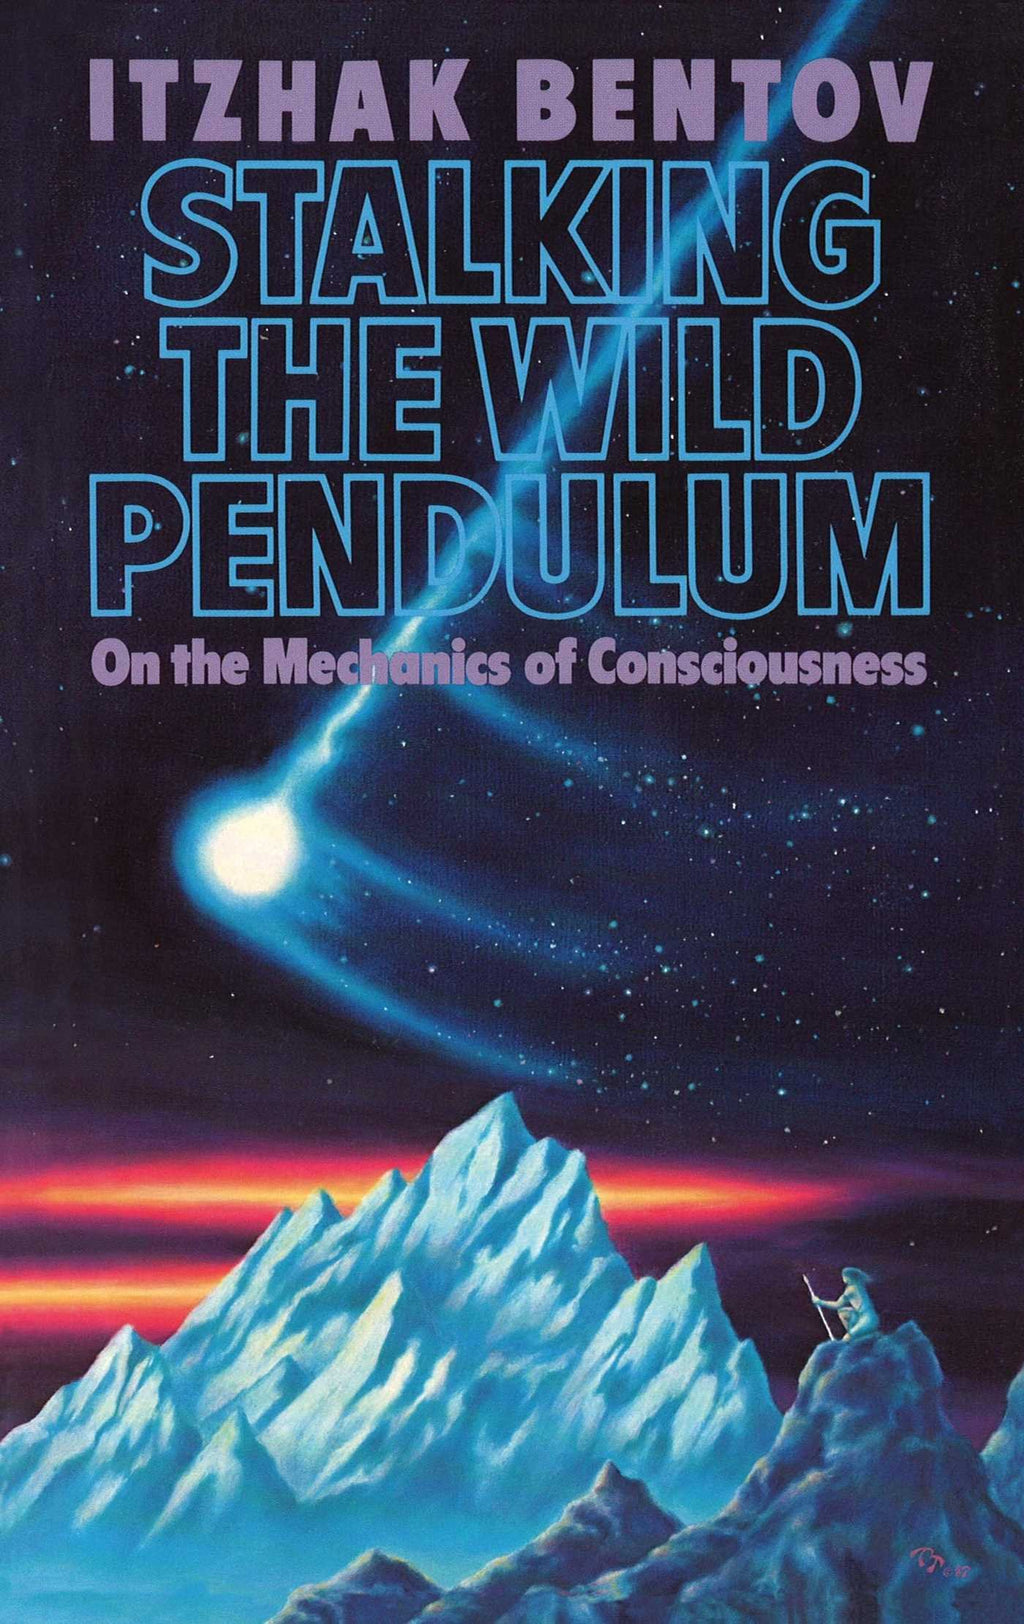 Stalking the wild pendulum: on the mechanics of consciousness: 0892812028